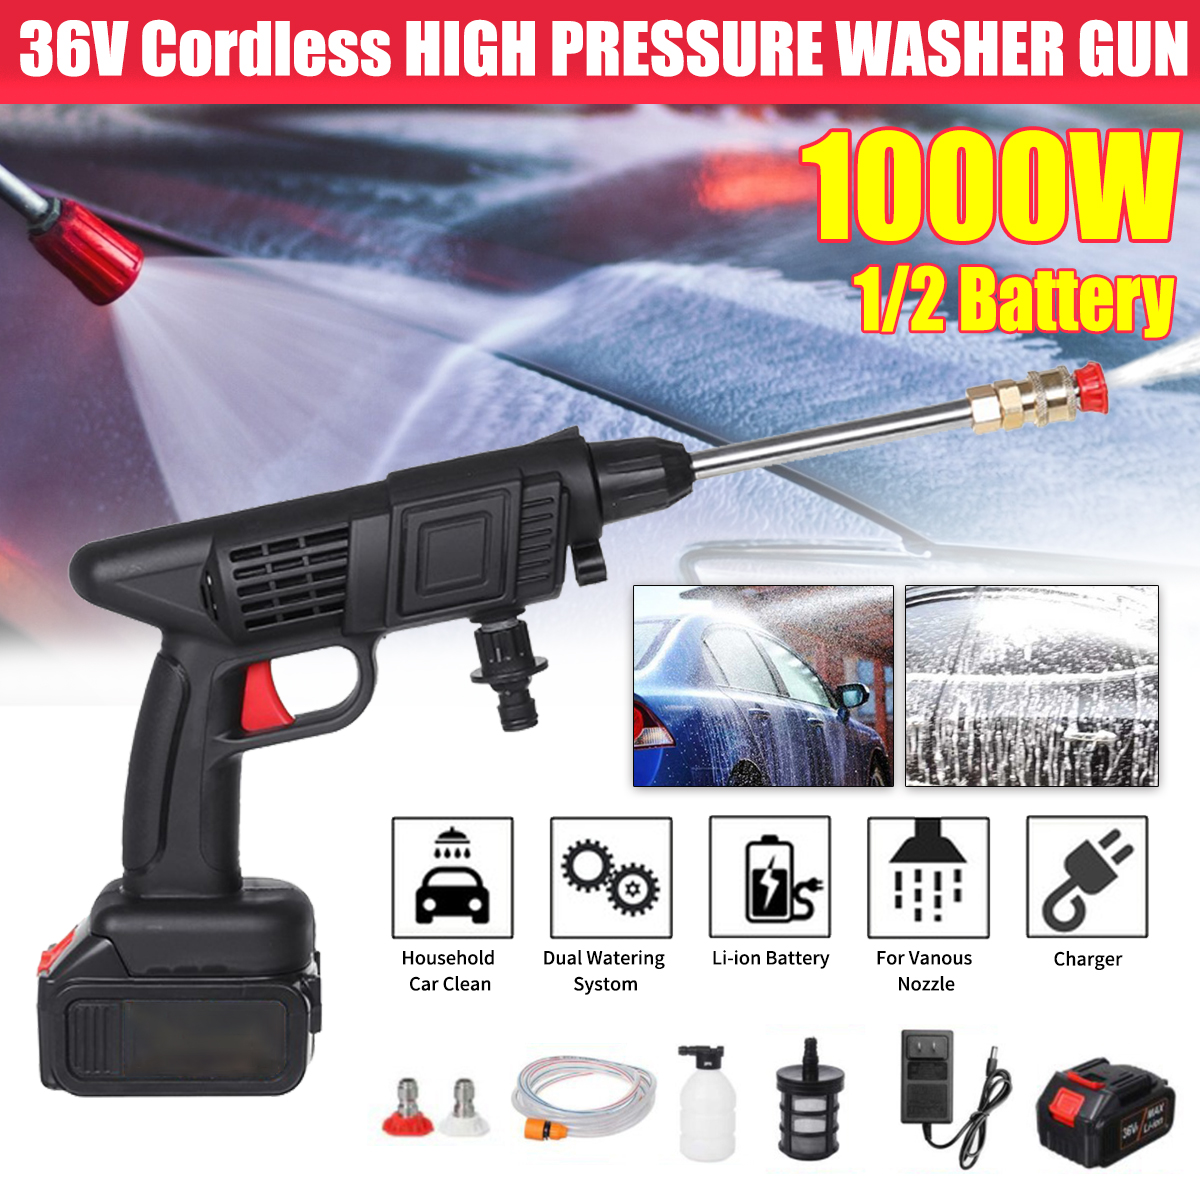 36V 150W Wireless High Pressure Washer Car Washing Machine Water Wash Spray Guns With None/1/2 Battery